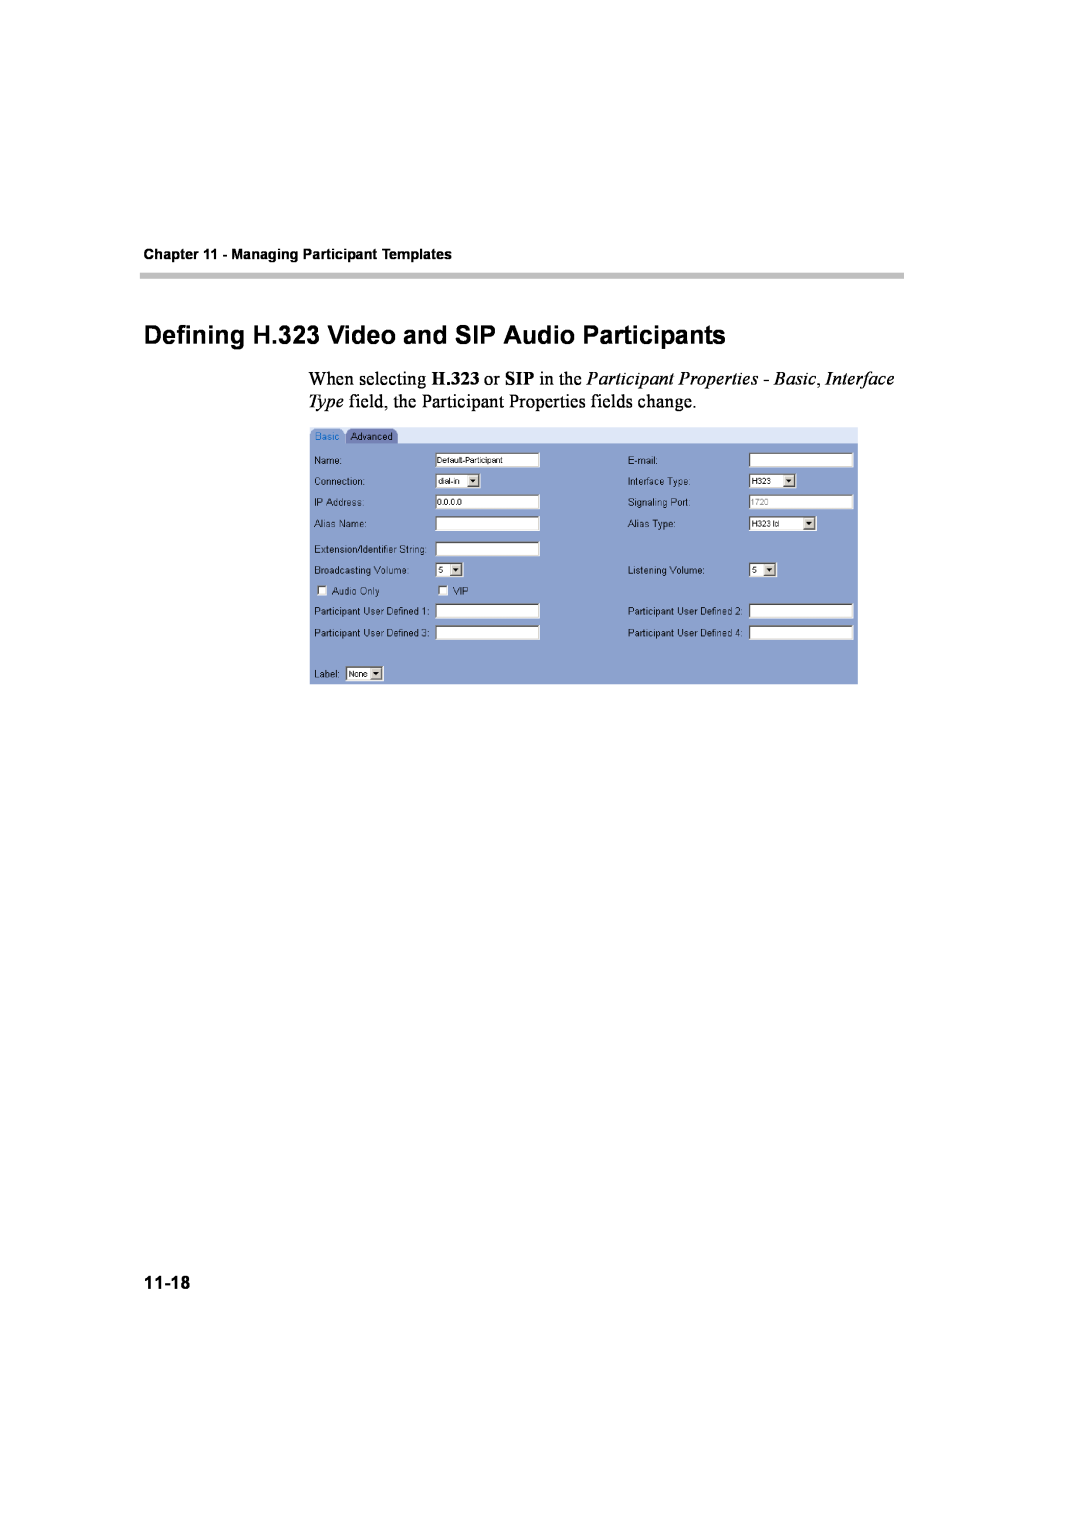 Polycom manual Defining H.323 Video and SIP Audio Participants, 11-18, Managing Participant Templates 